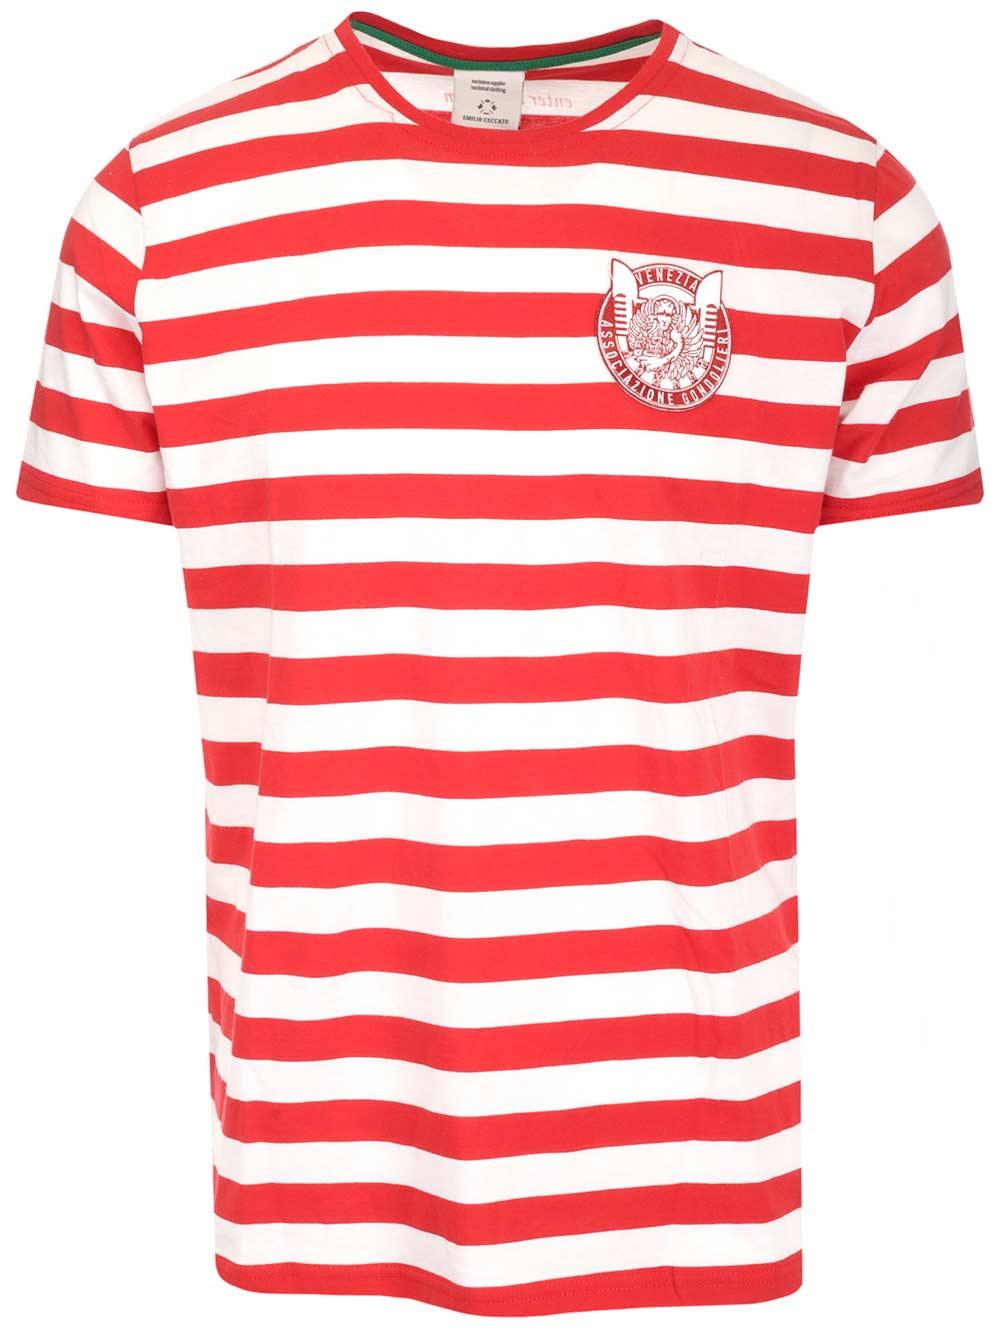 Striped gondolier t-shirt